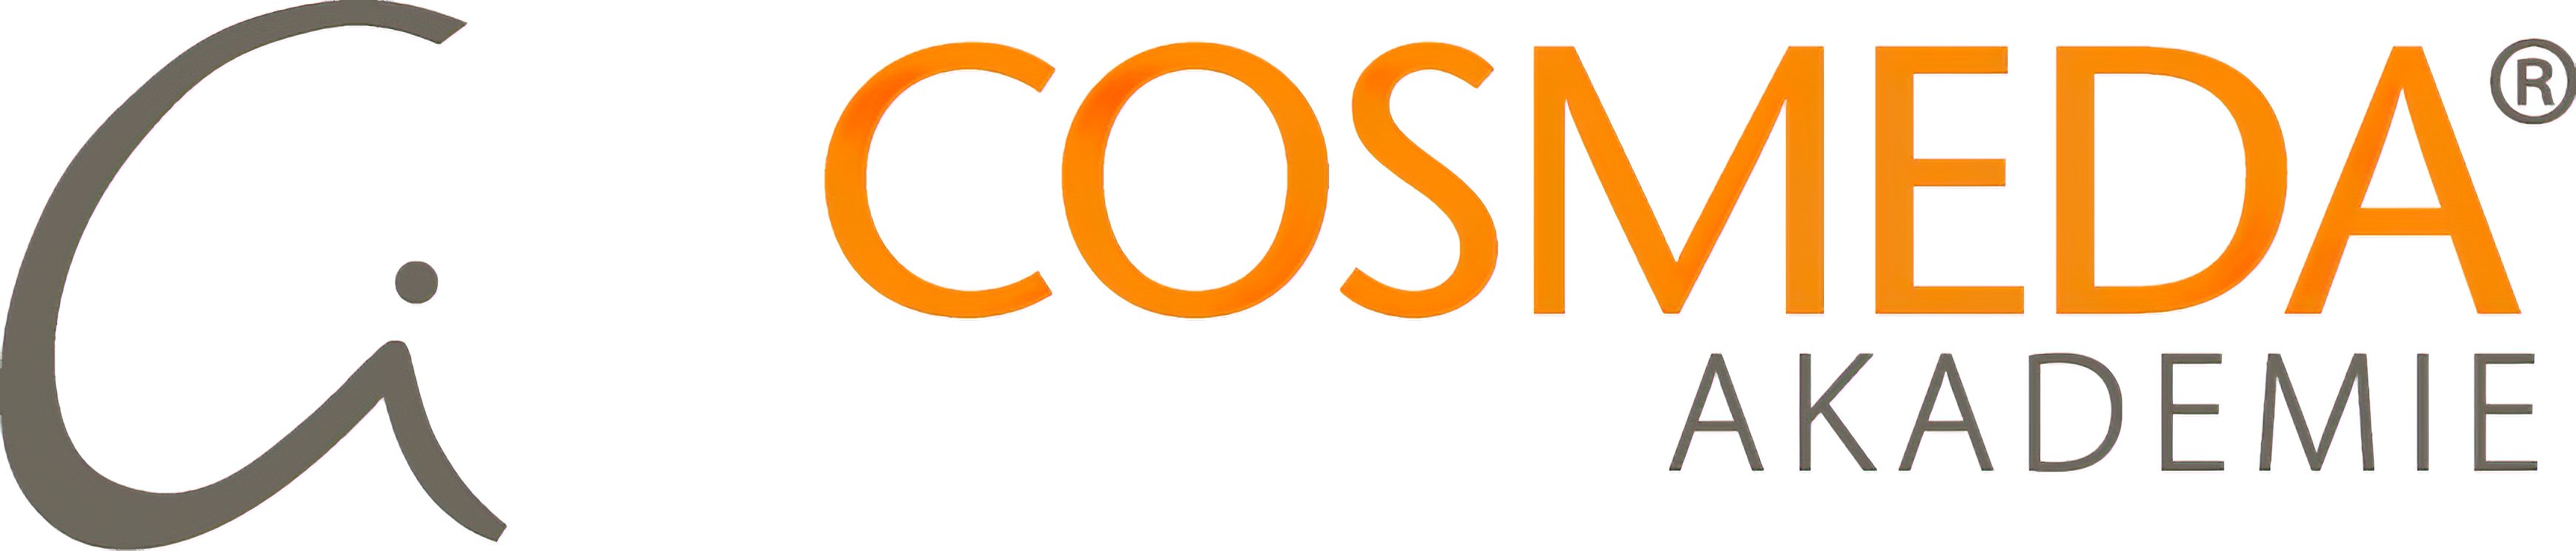 Cosmeda-Akademie Landstuhl Logo